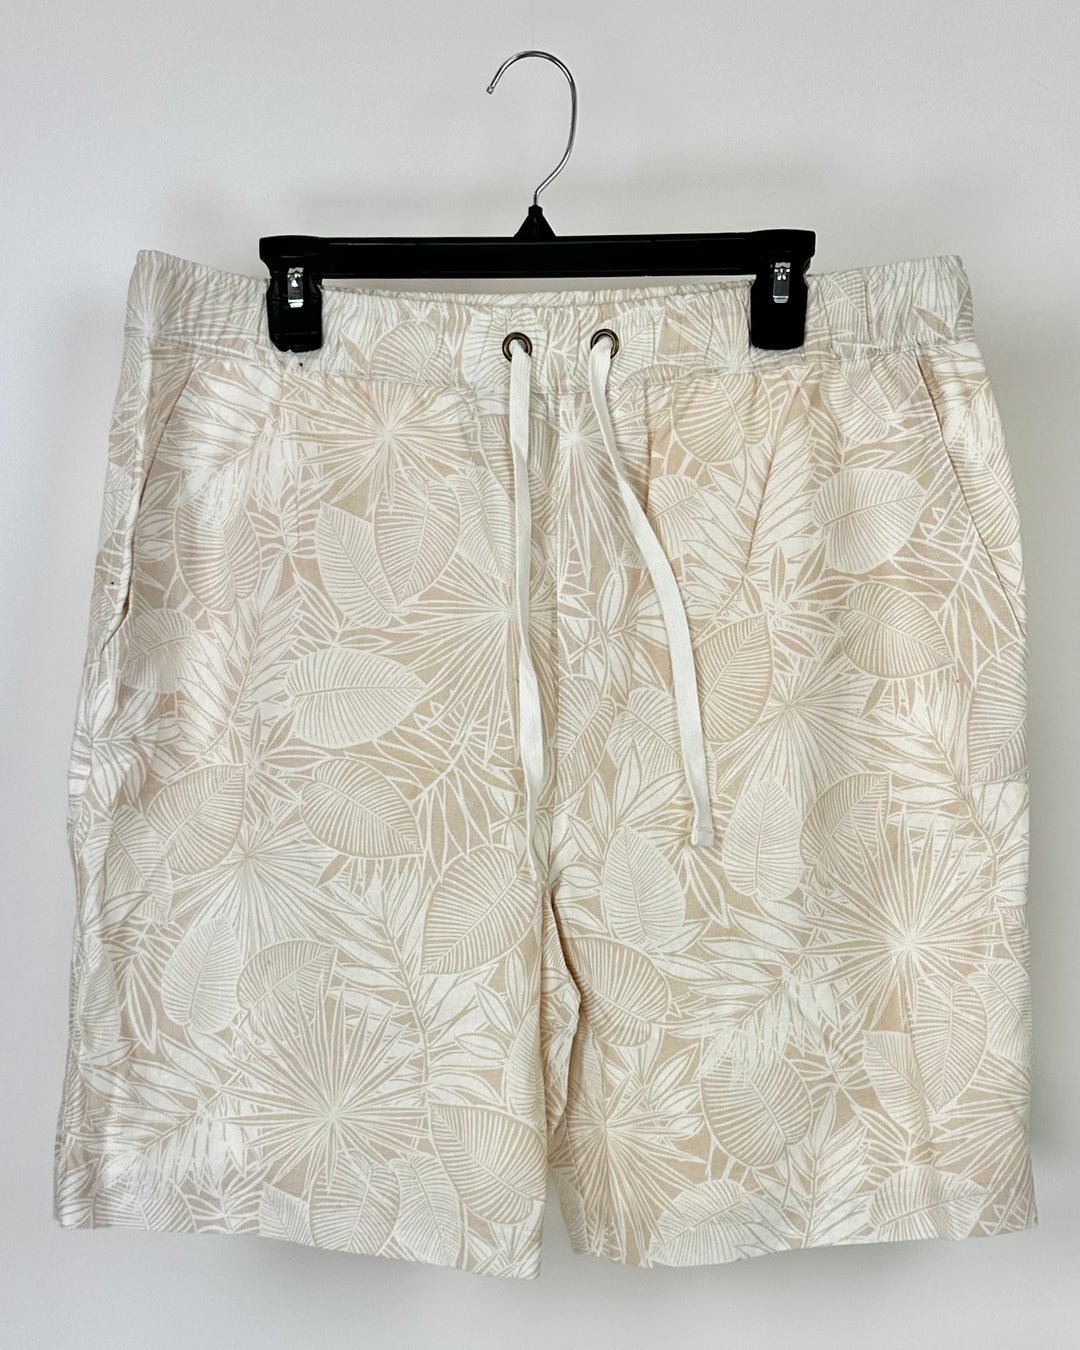 MENS Beige Printed Shorts - Medium and Large